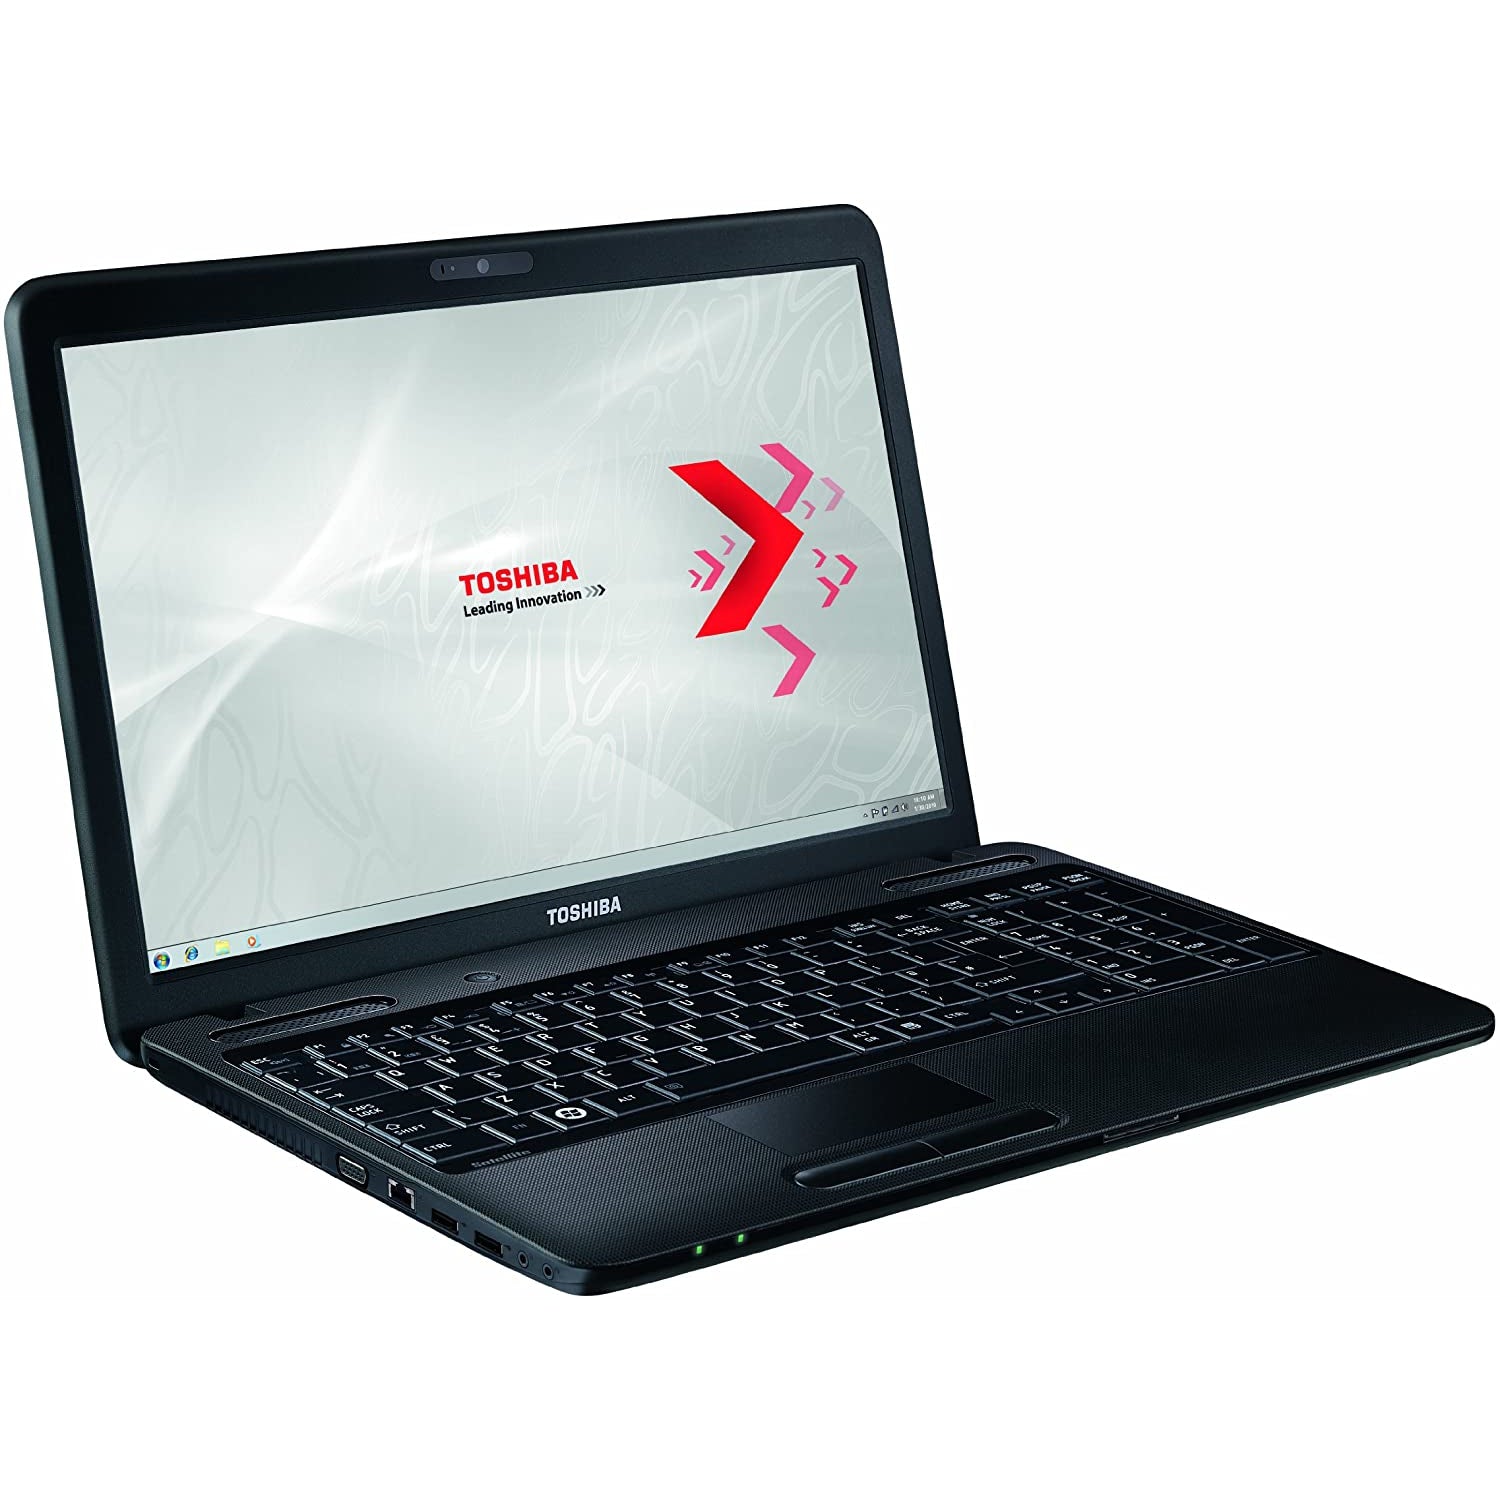 Toshiba Satellite C660-2KO 15.6 inch Laptop (Intel Core i3-2350M, 2.30GHz, RAM 4GB, HDD 500GB, Windows 7 Home) Black